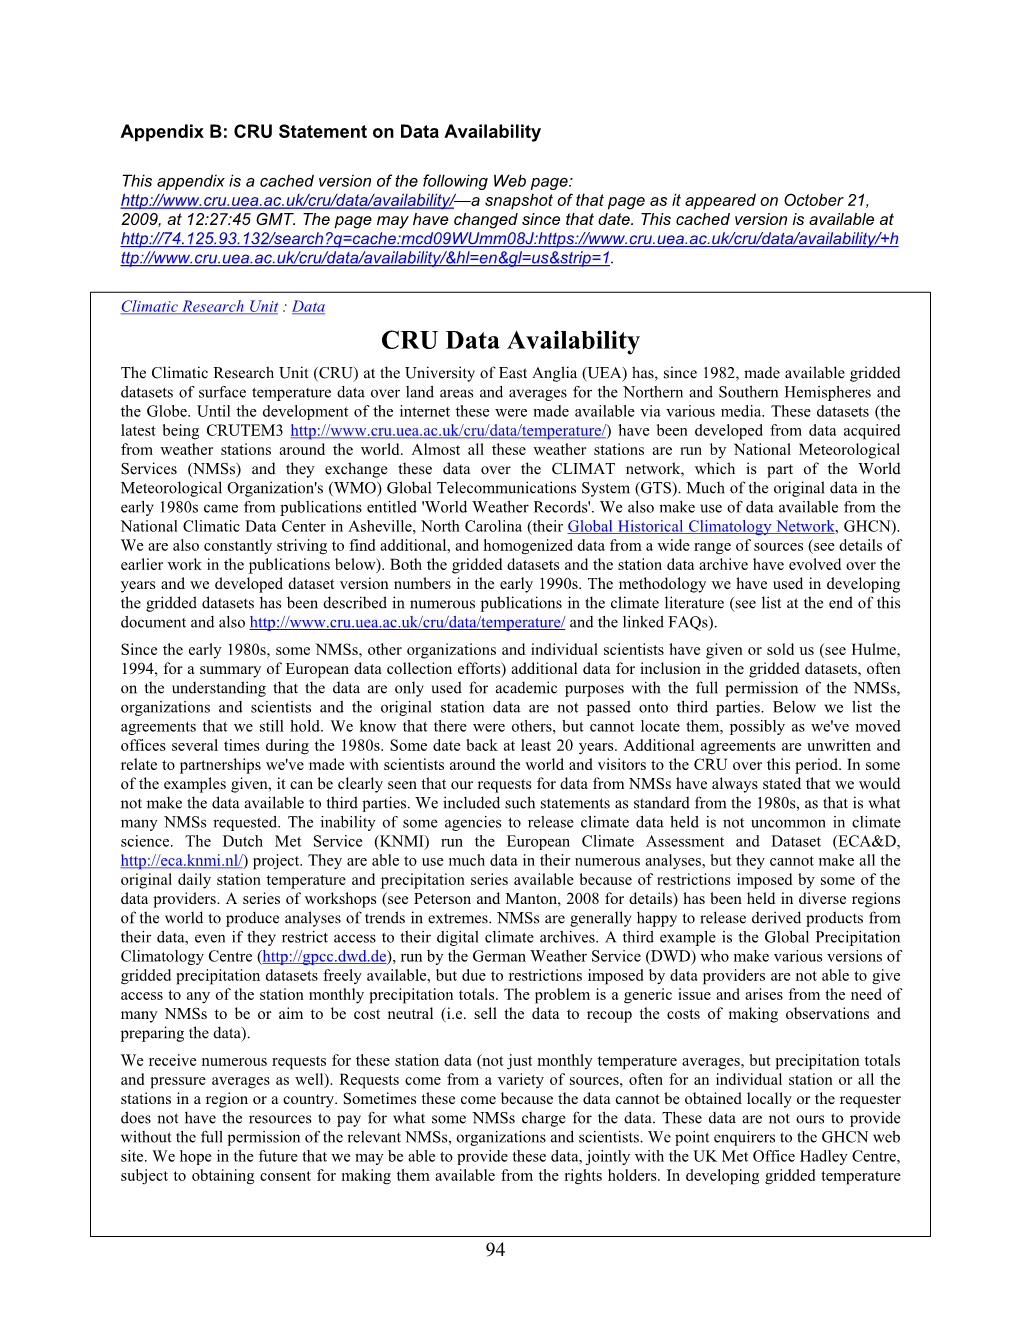 CRU Statement on Data Availability